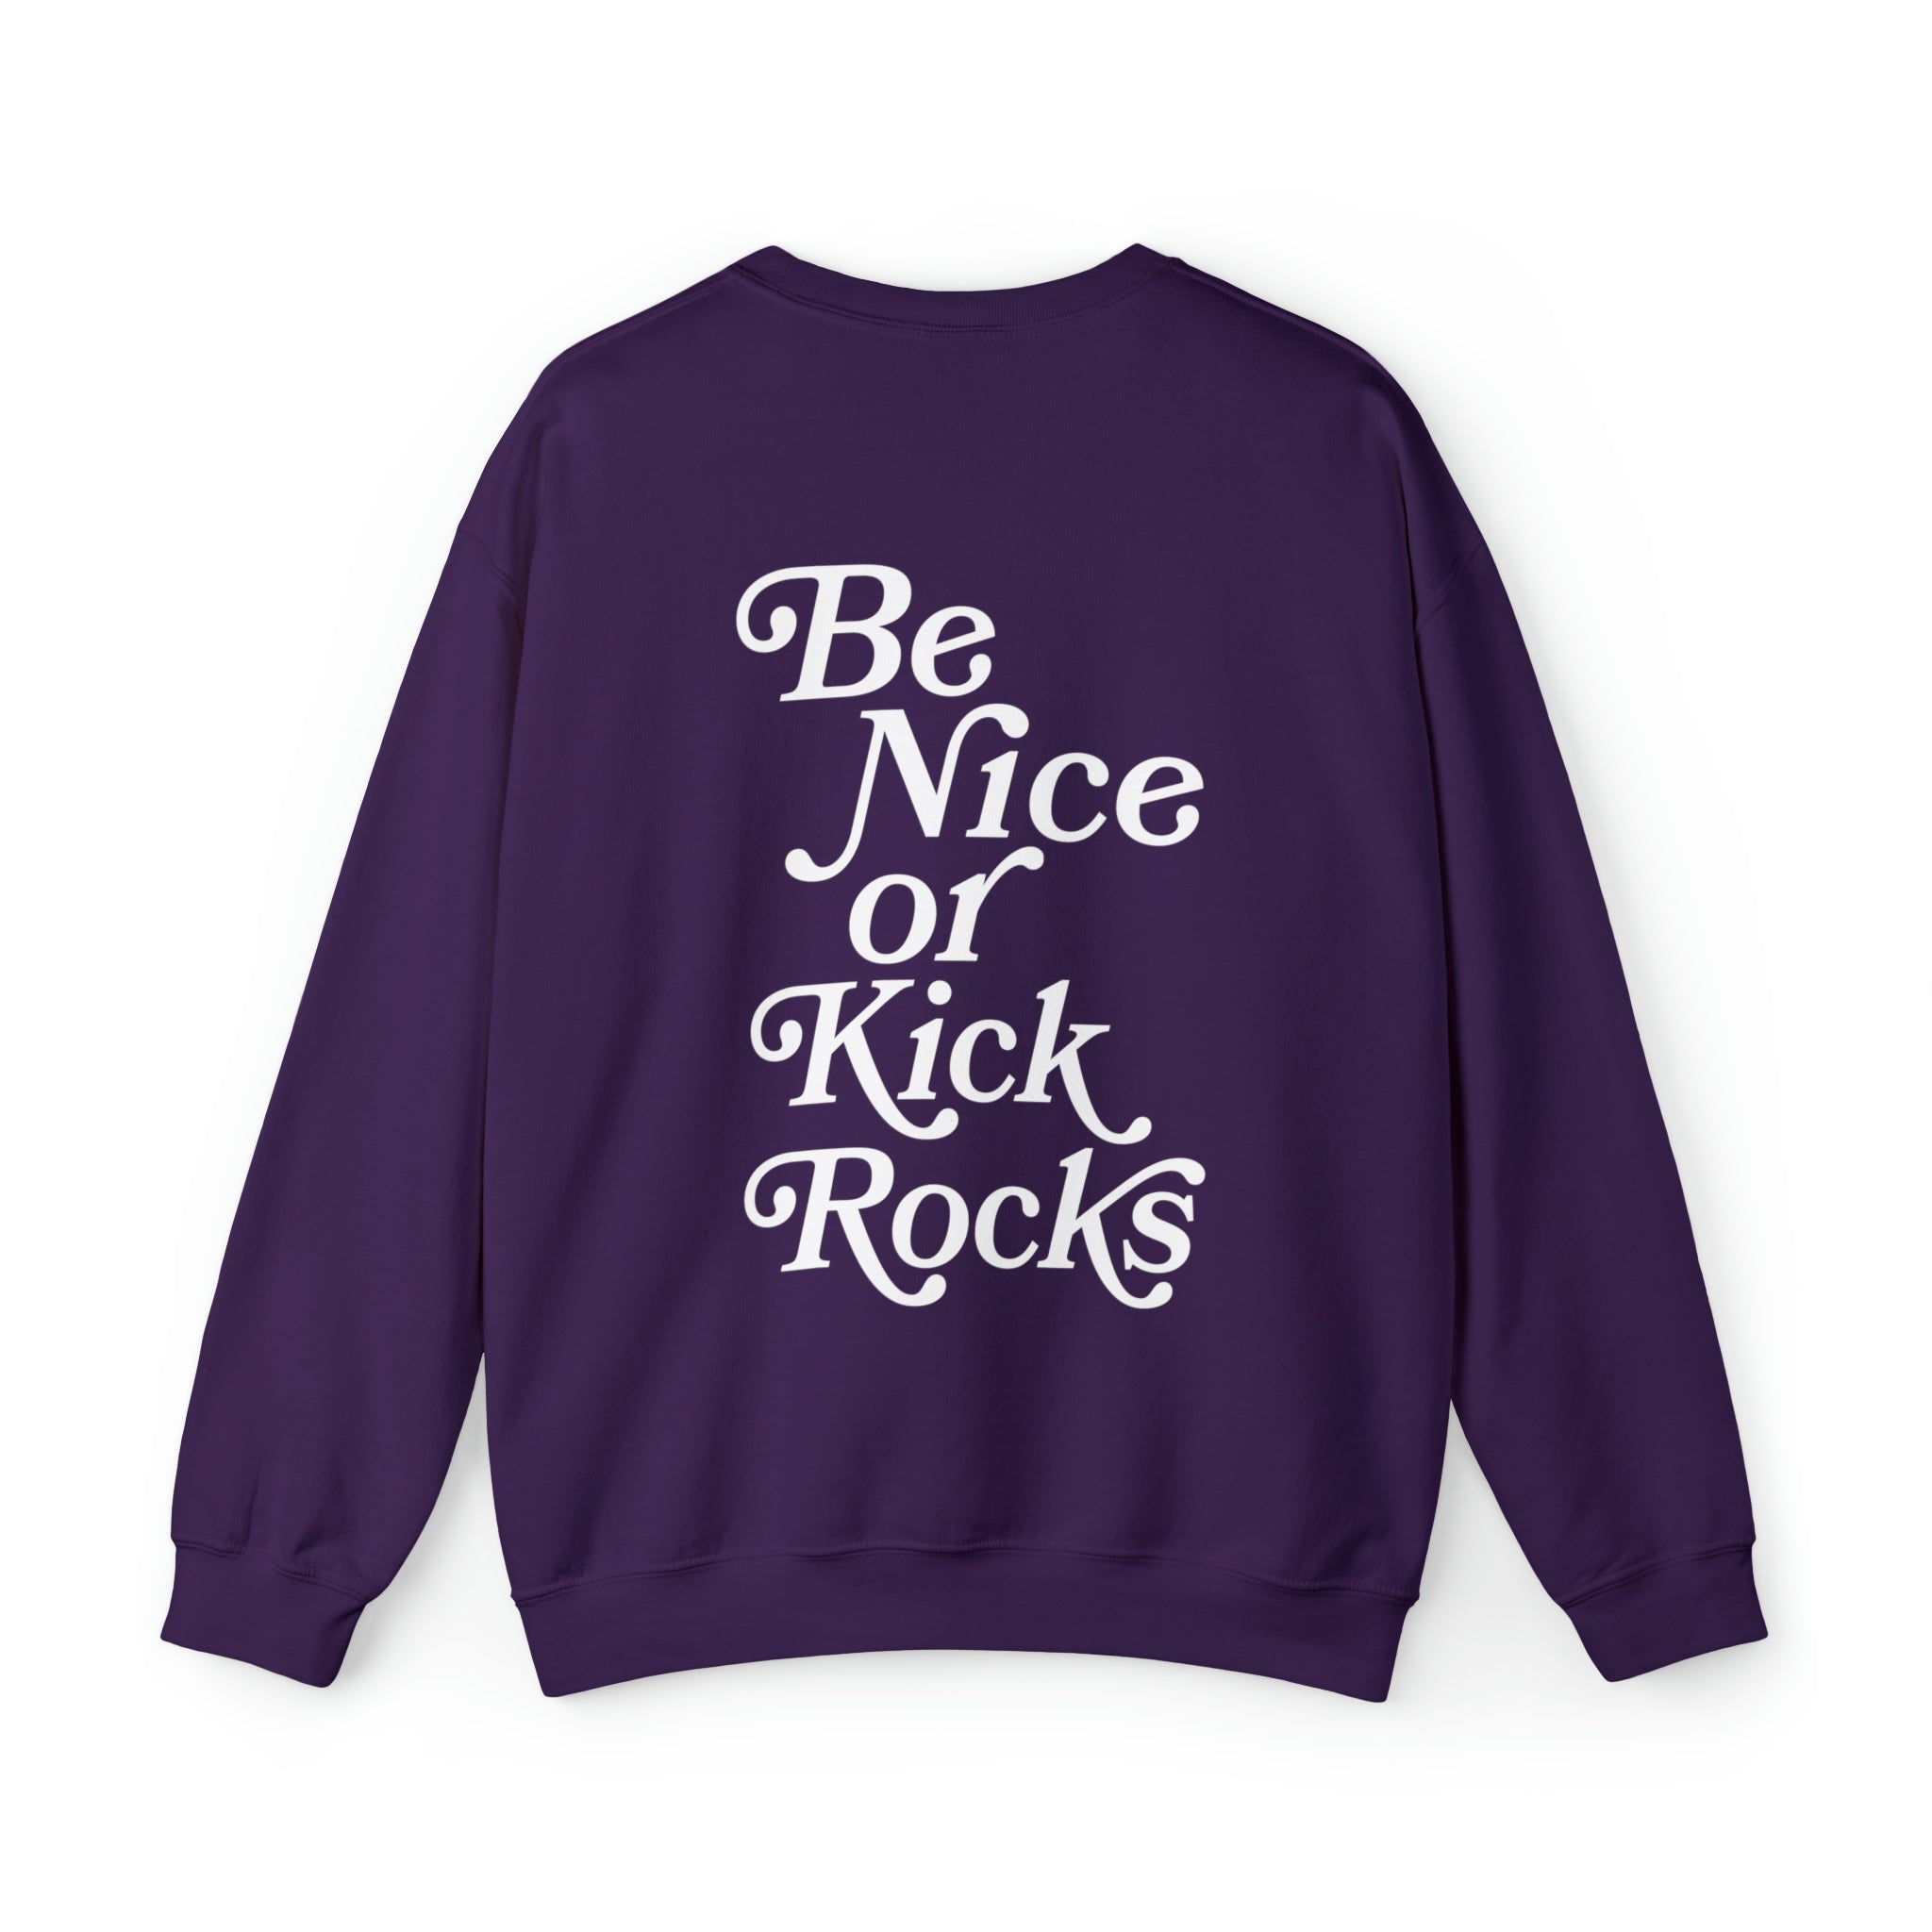 Crewneck sweatshirt with Be Nice or Kick Rocks inspirational message